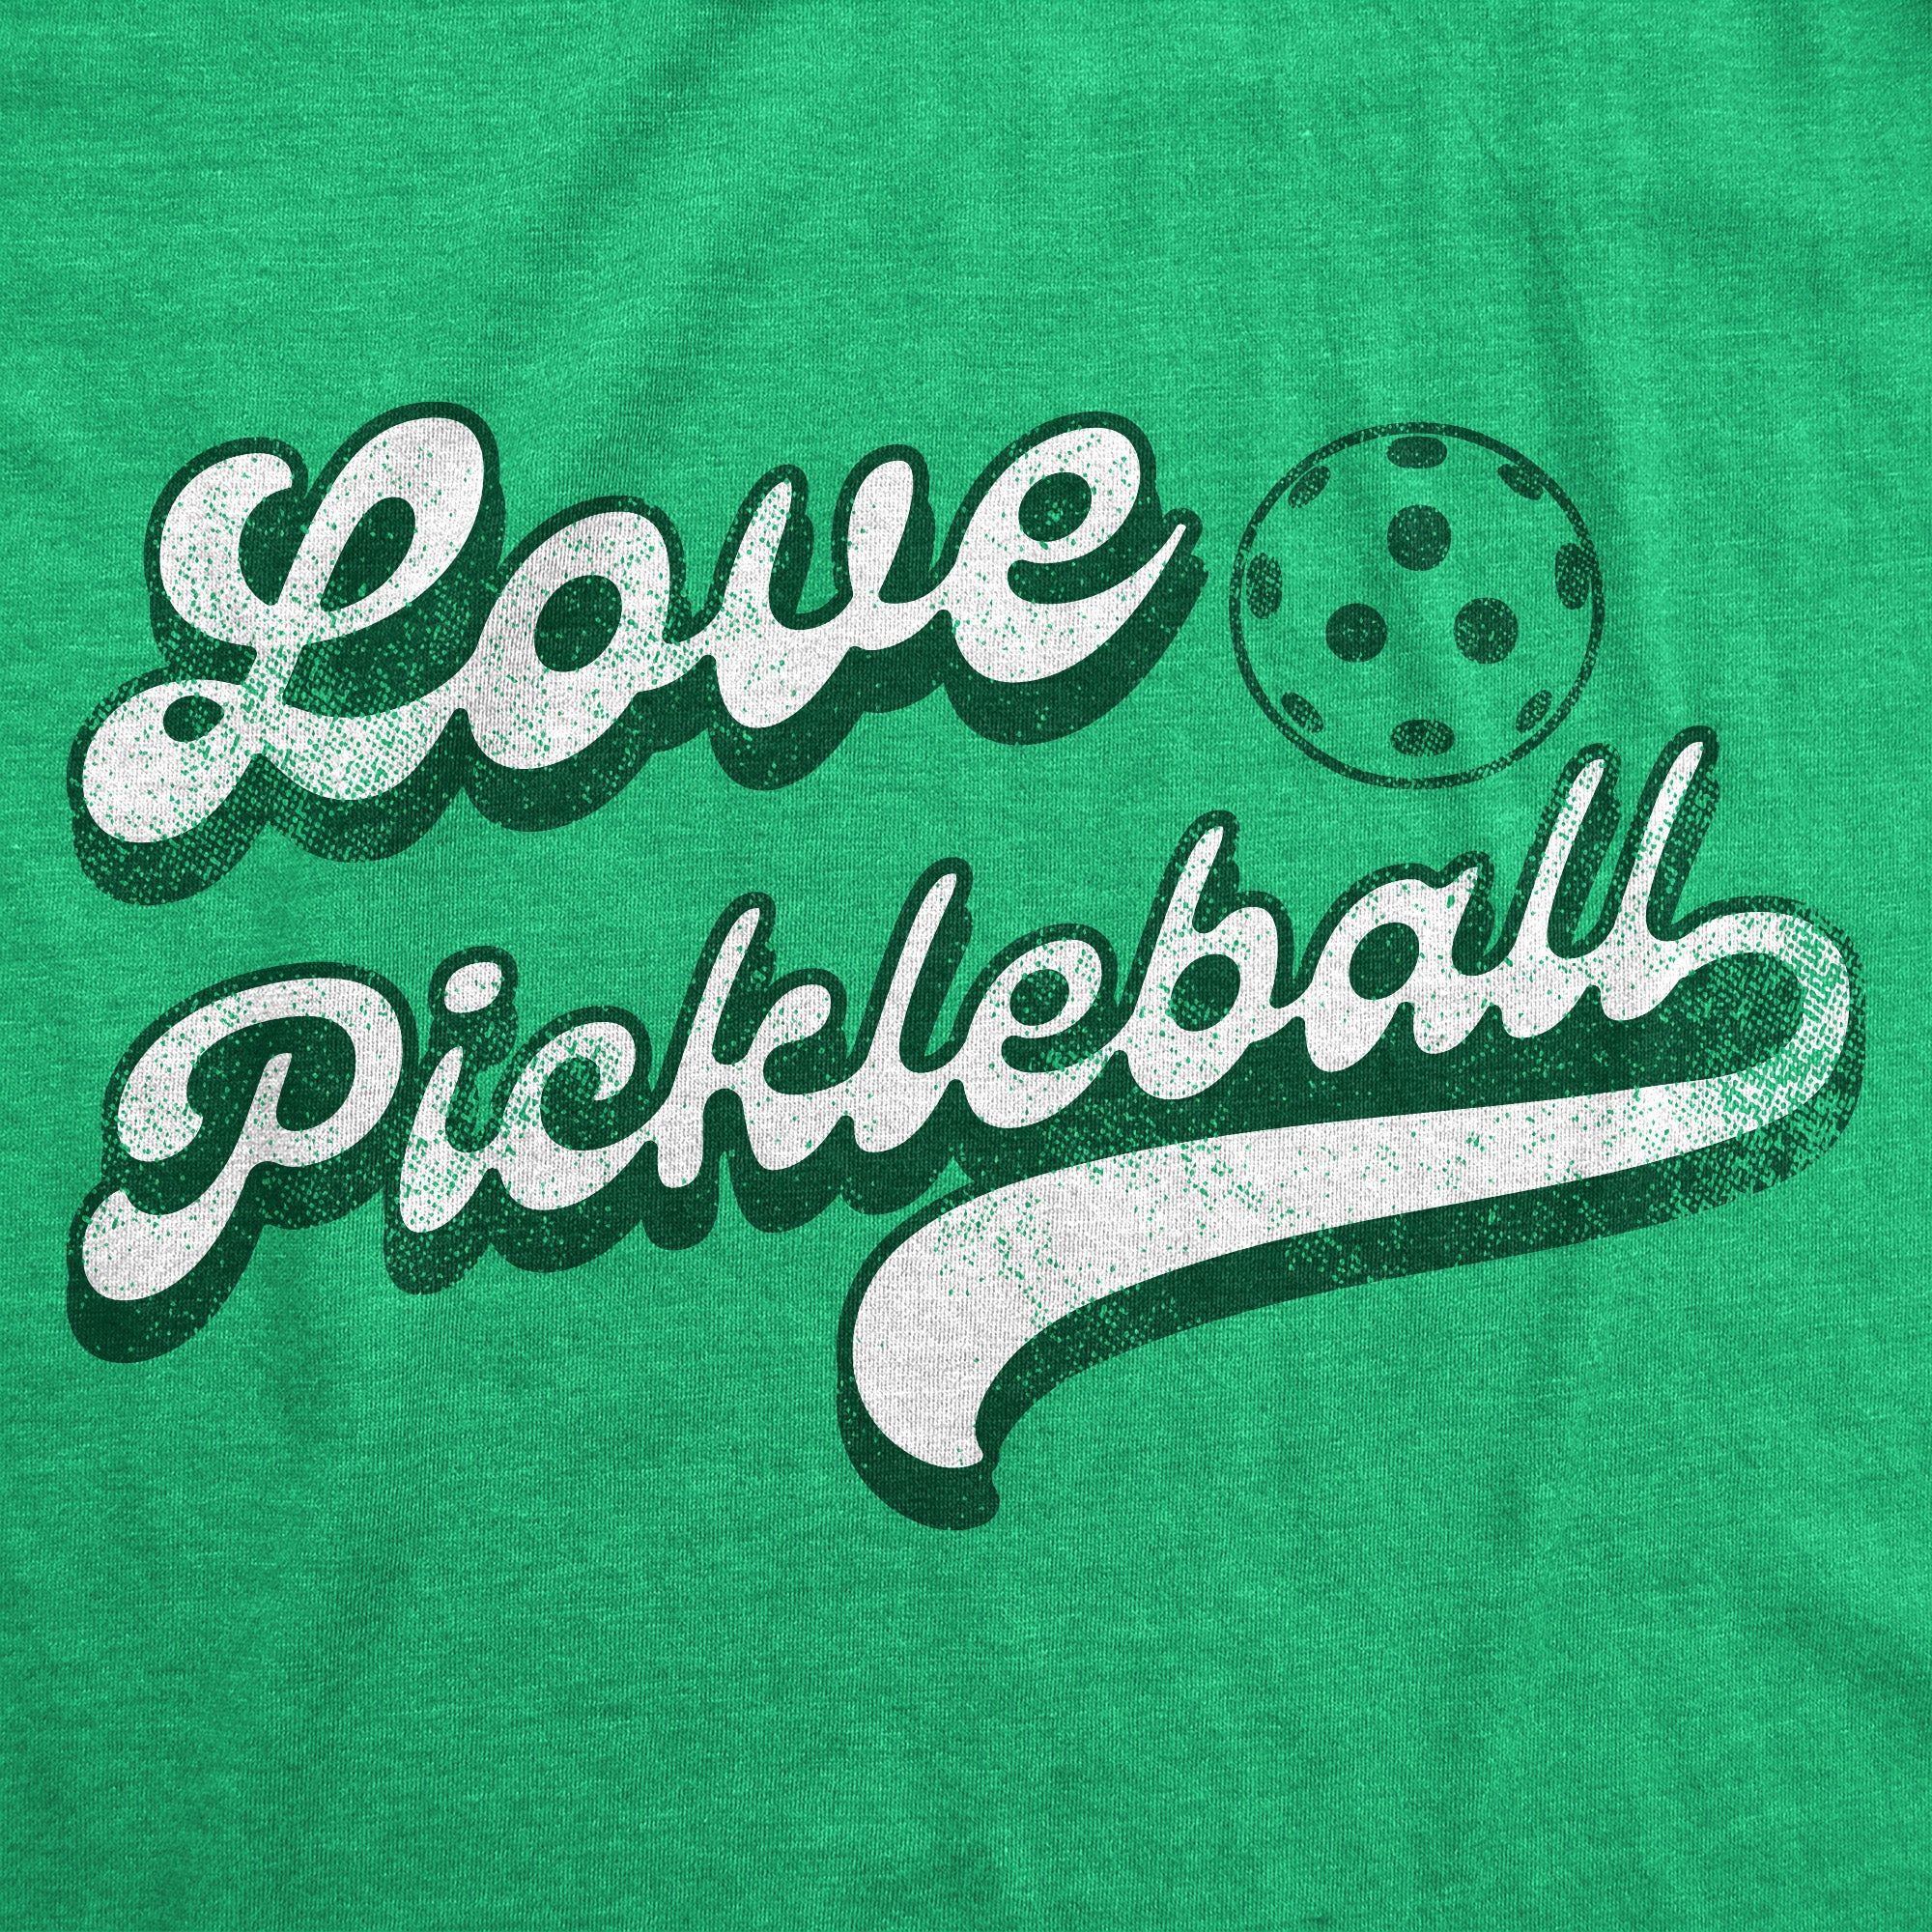 Funny Heather Green - Love Pickleball Love Pickleball Womens T Shirt Nerdy Sarcastic Tee